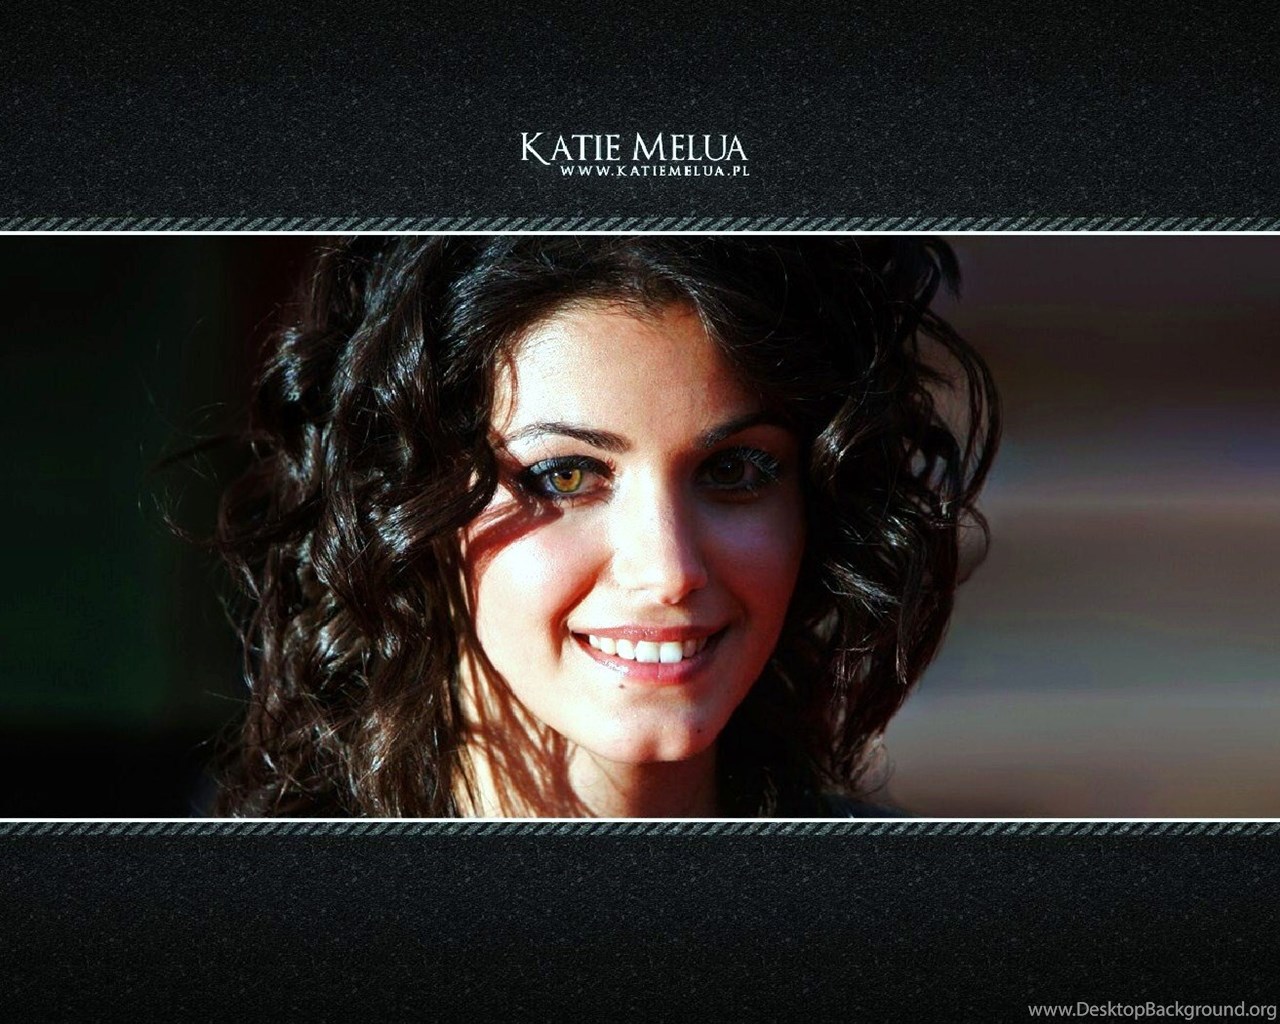 Katie melua wonderful life. Ketevan Кэти Мелуа. Katie Melua - the House. Katie Melua - a Happy place. Katie Melua 2013 Ketevan обложка для компакт диска.